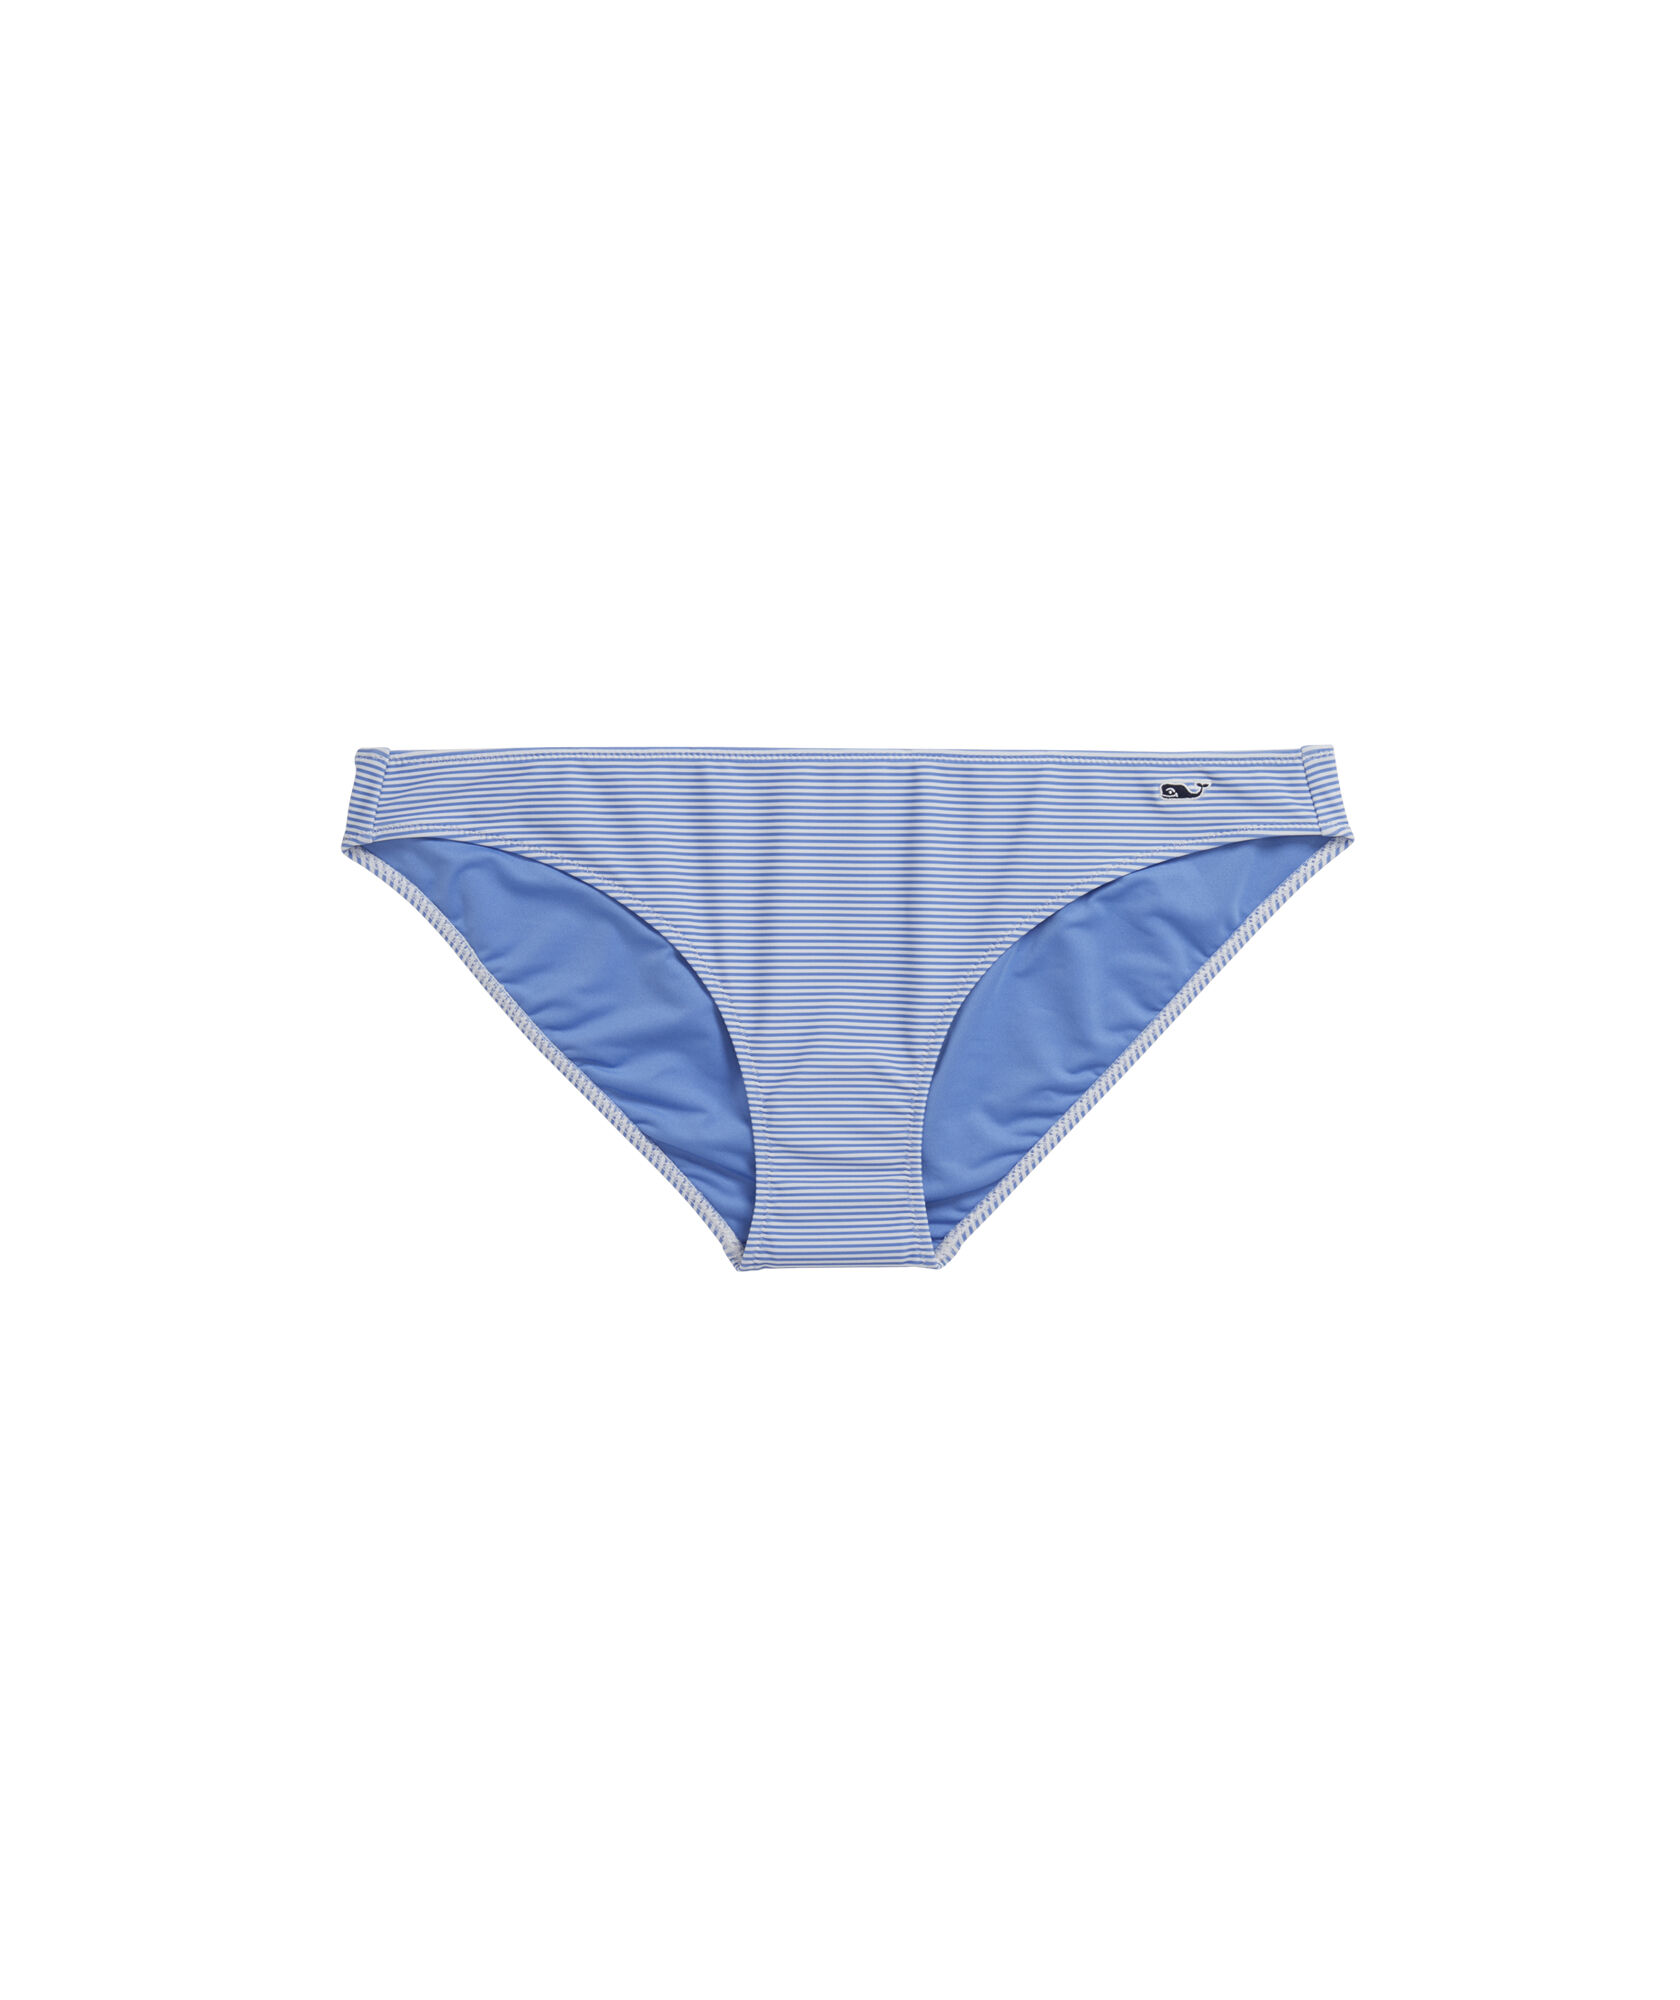 OUTLET Micro Stripe Bikini Bottom